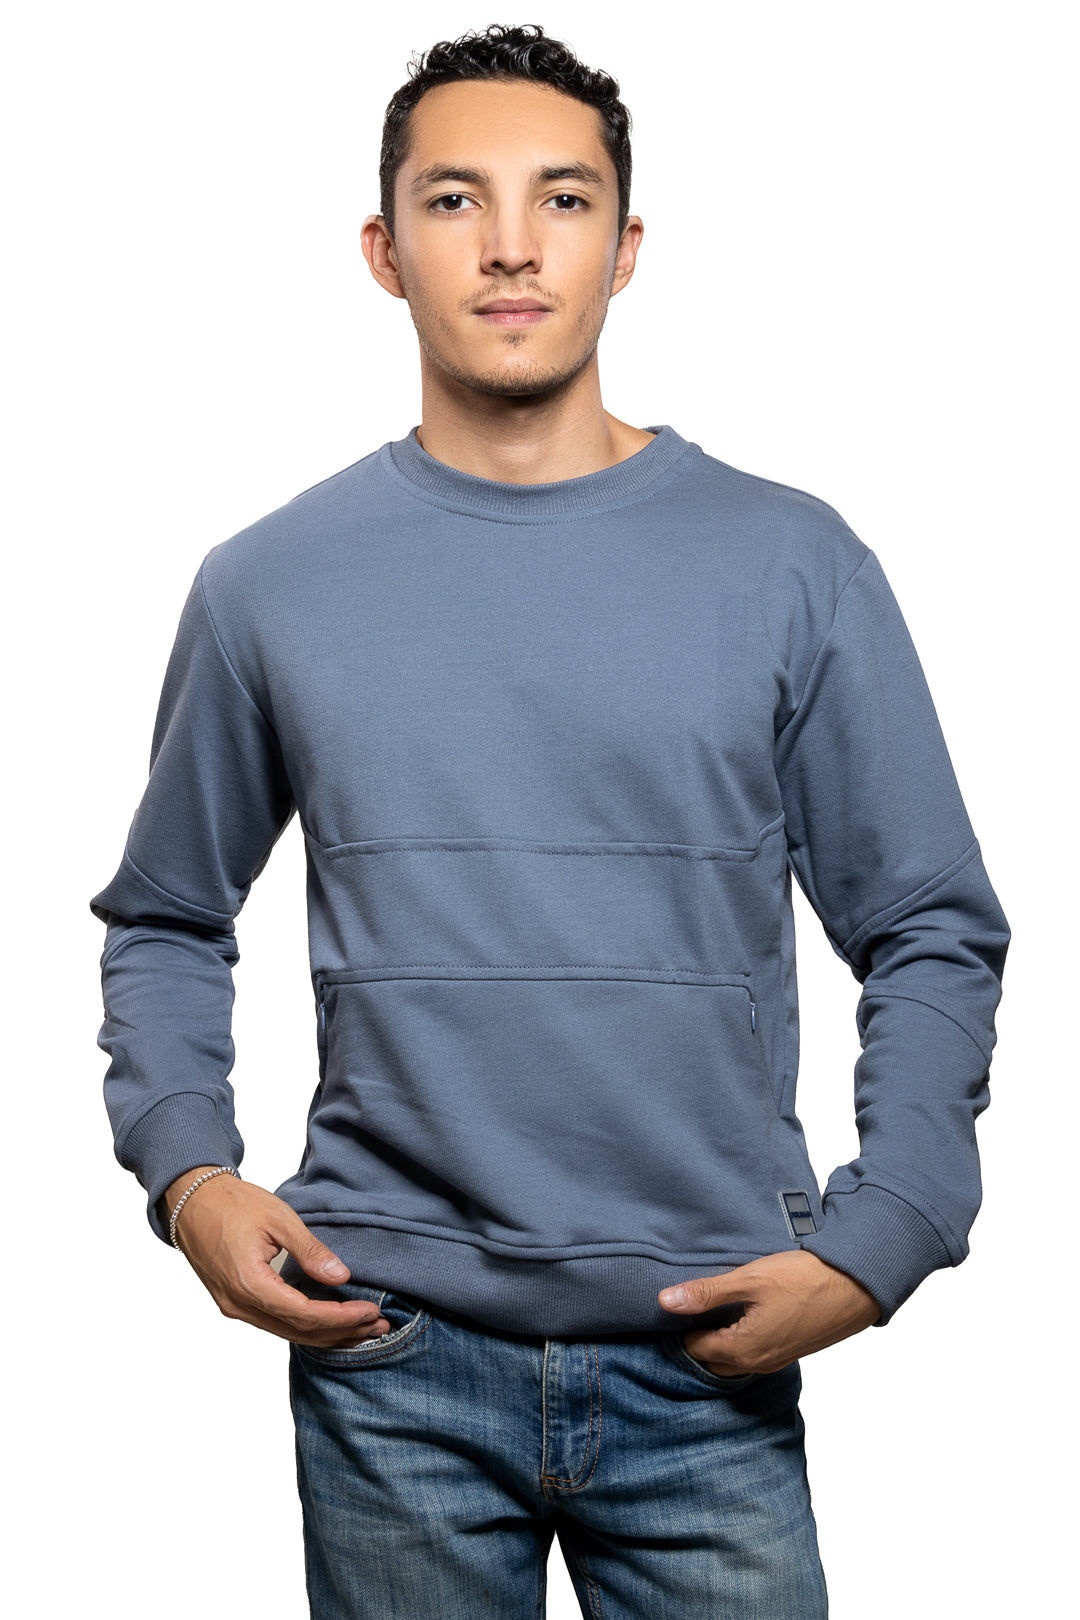 Sweater Basic Urban Hombre Azul